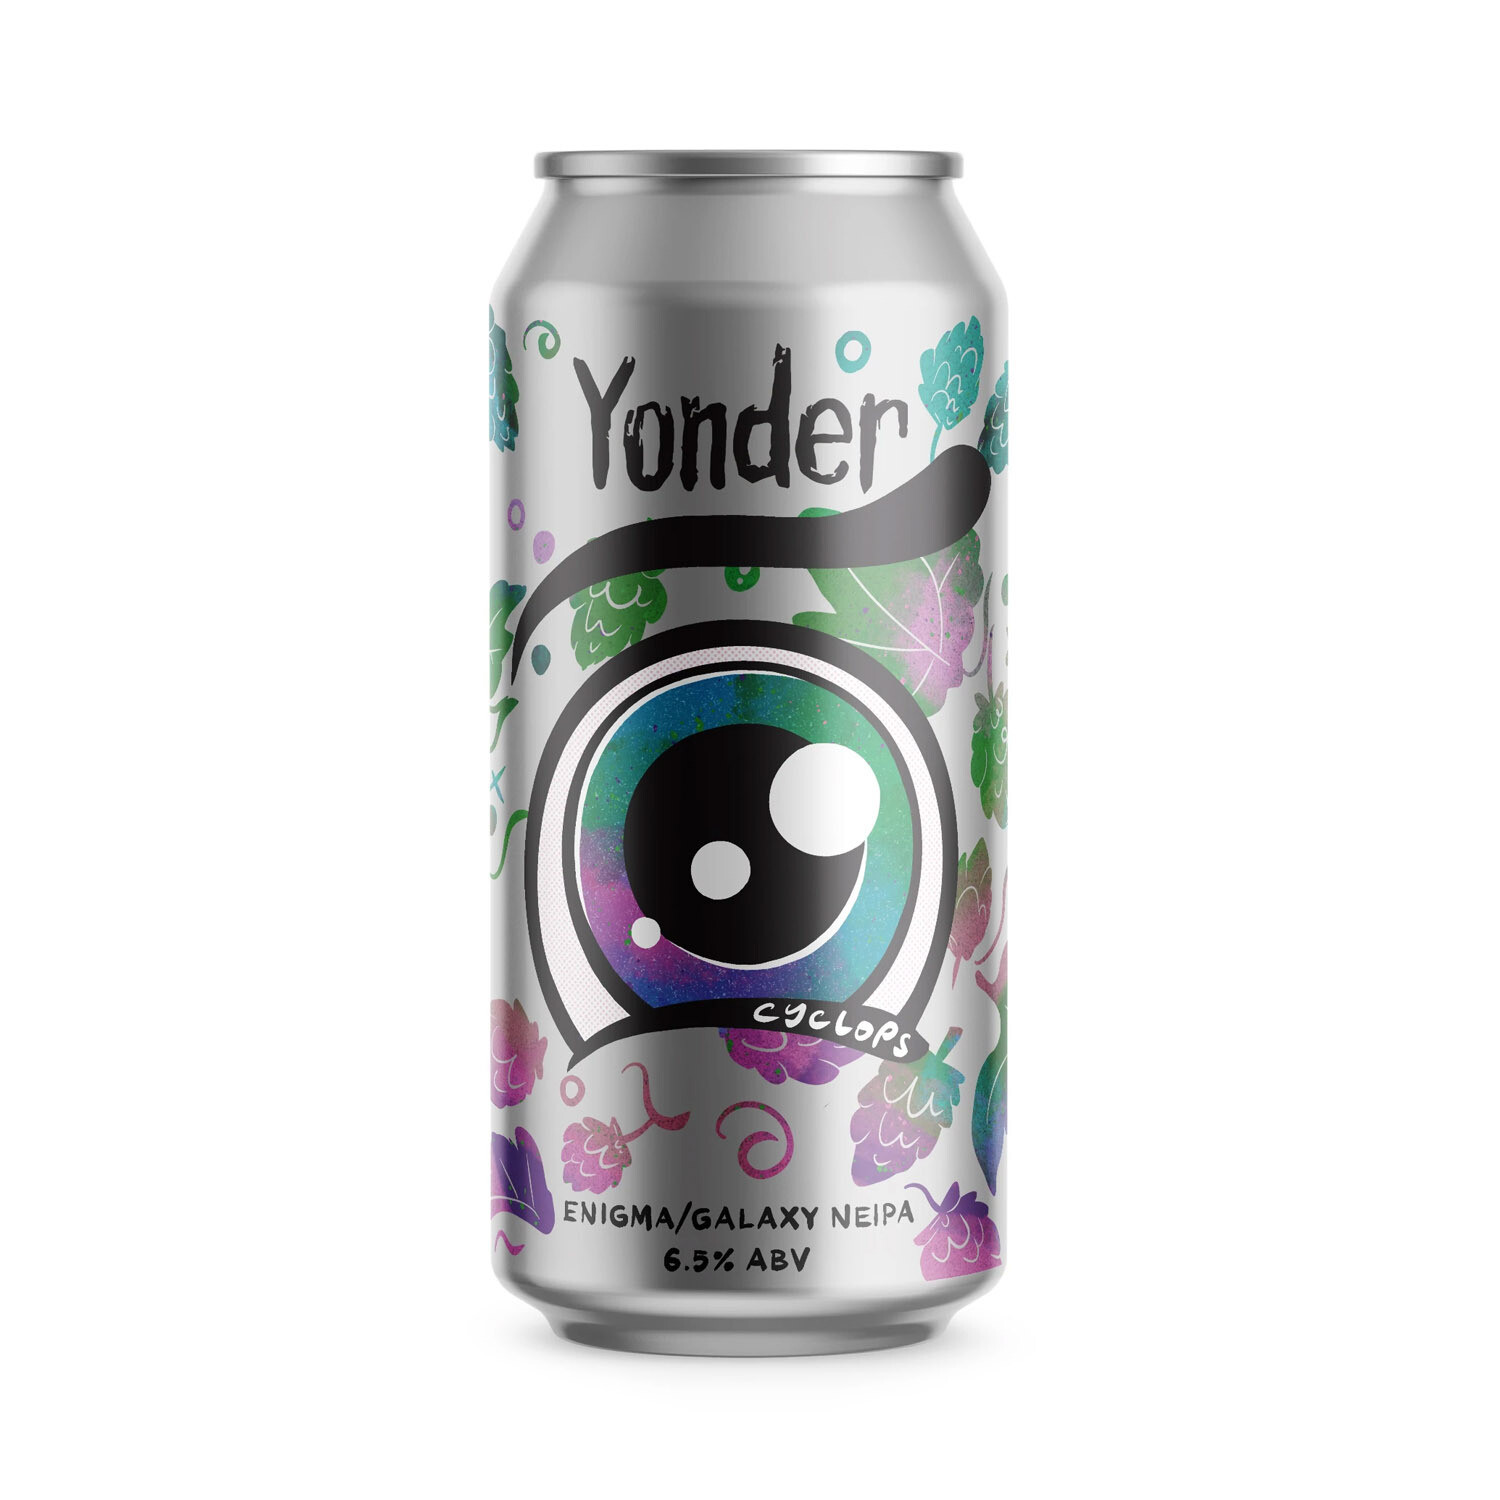 Yonder Cyclops IPA